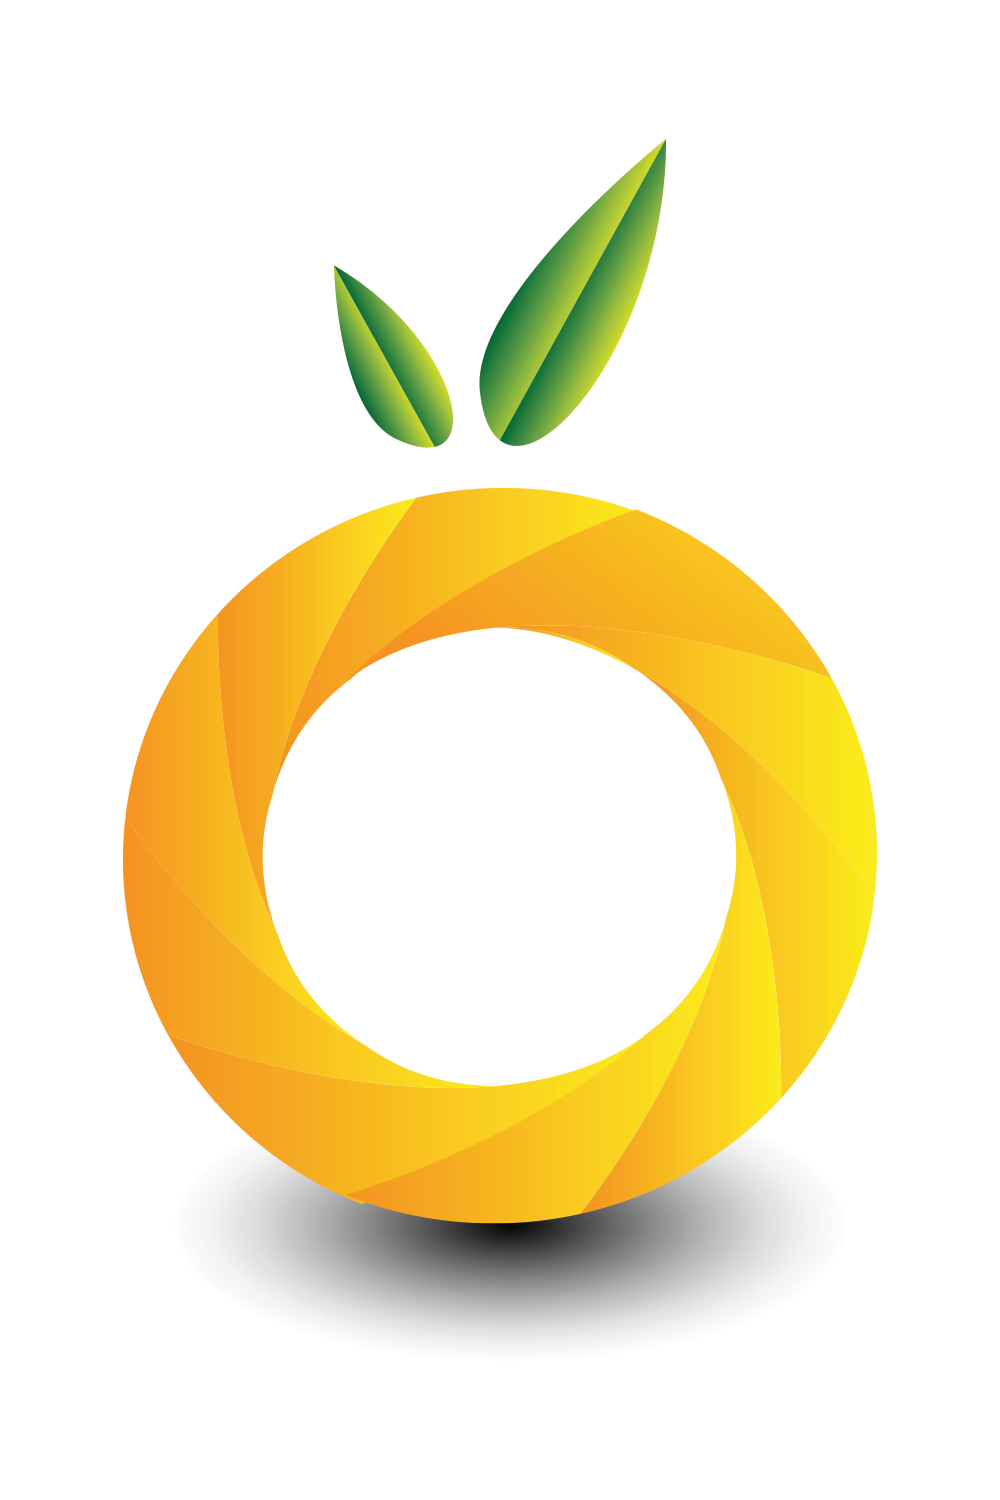 Smart Orange Logo Design pinterest preview image.